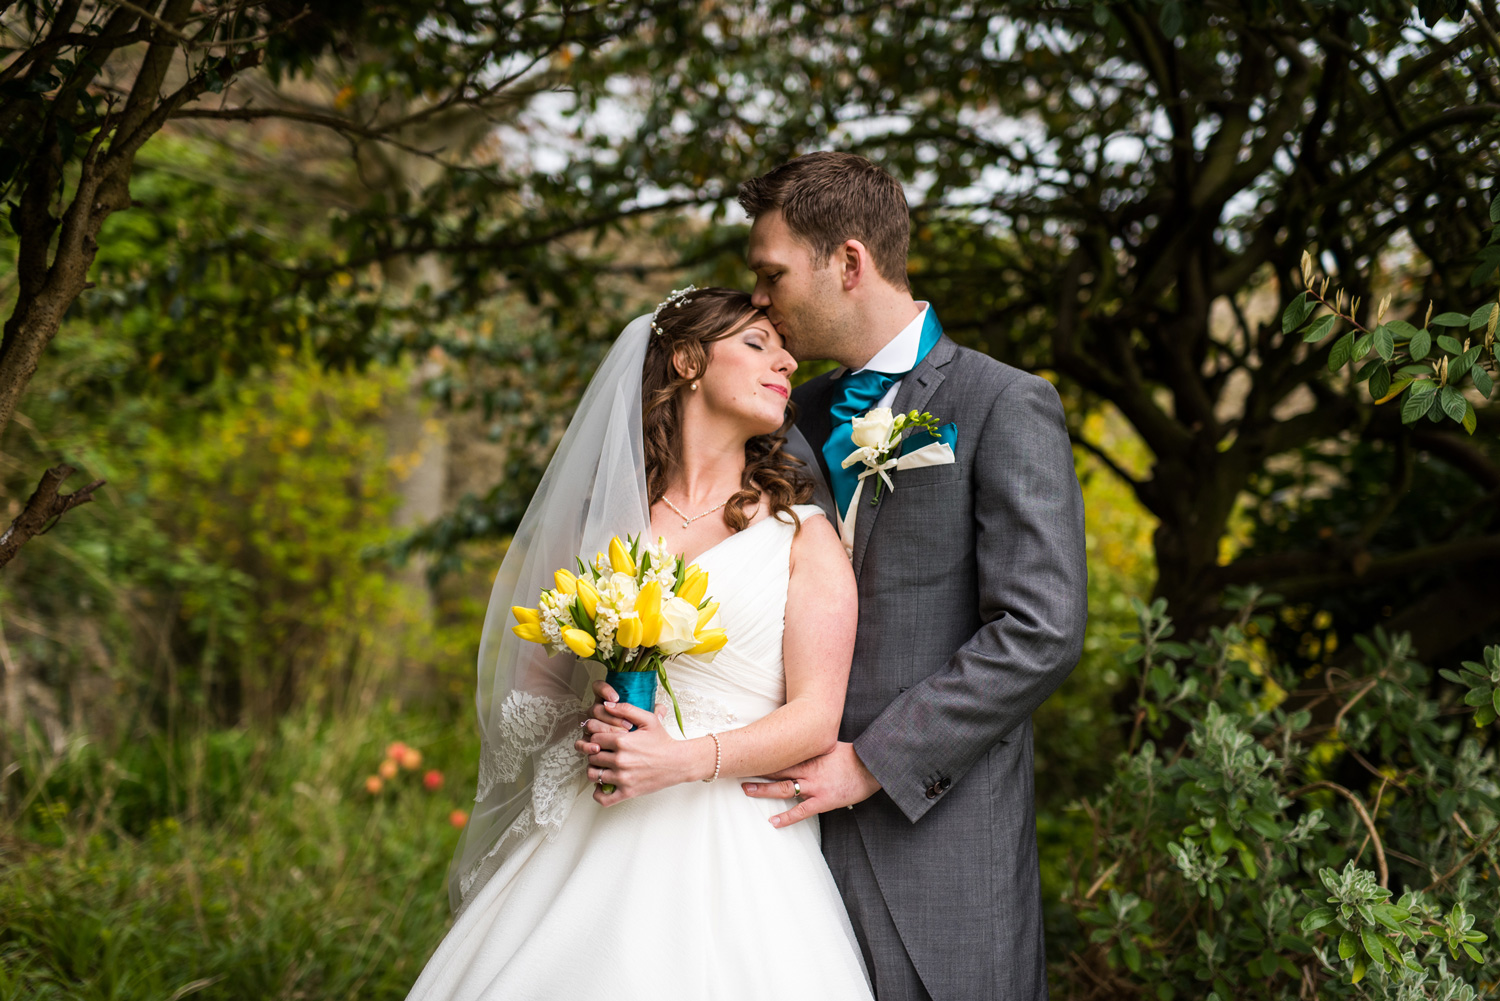 Lympne Castle reception – Wedding photography – Lucie & Steve